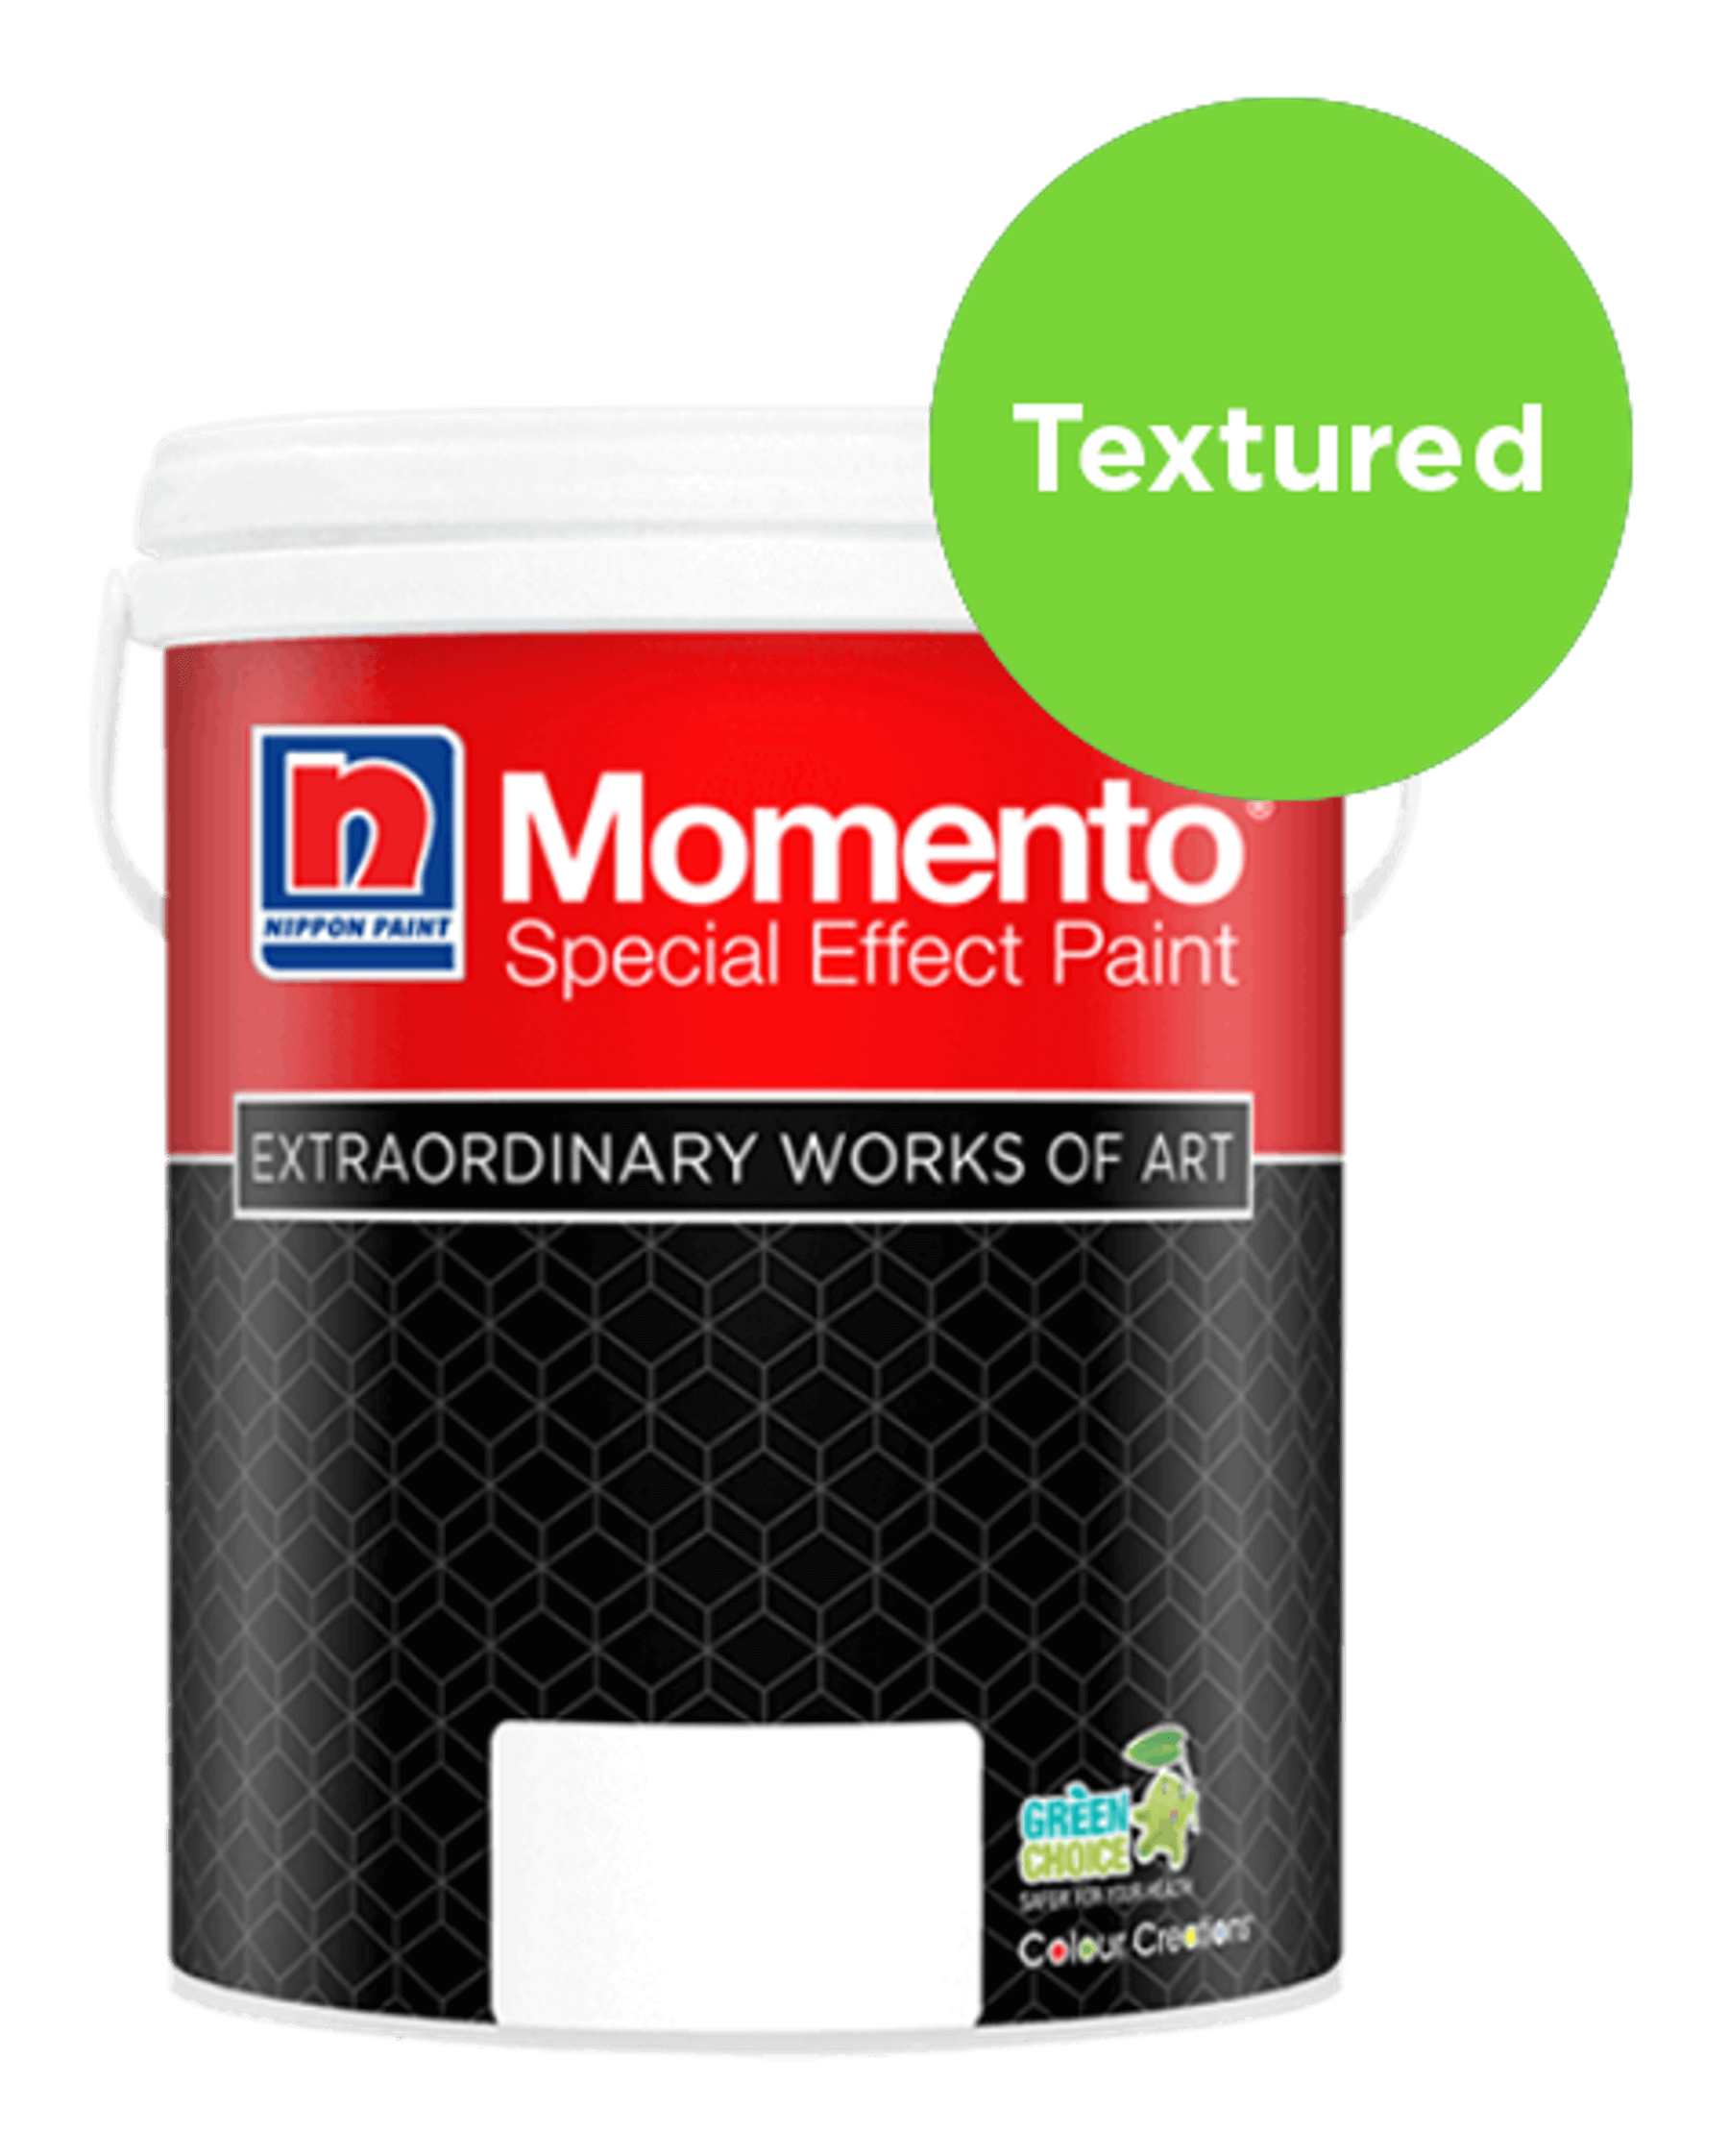 Momento® Textured Series - Sparkle Silver